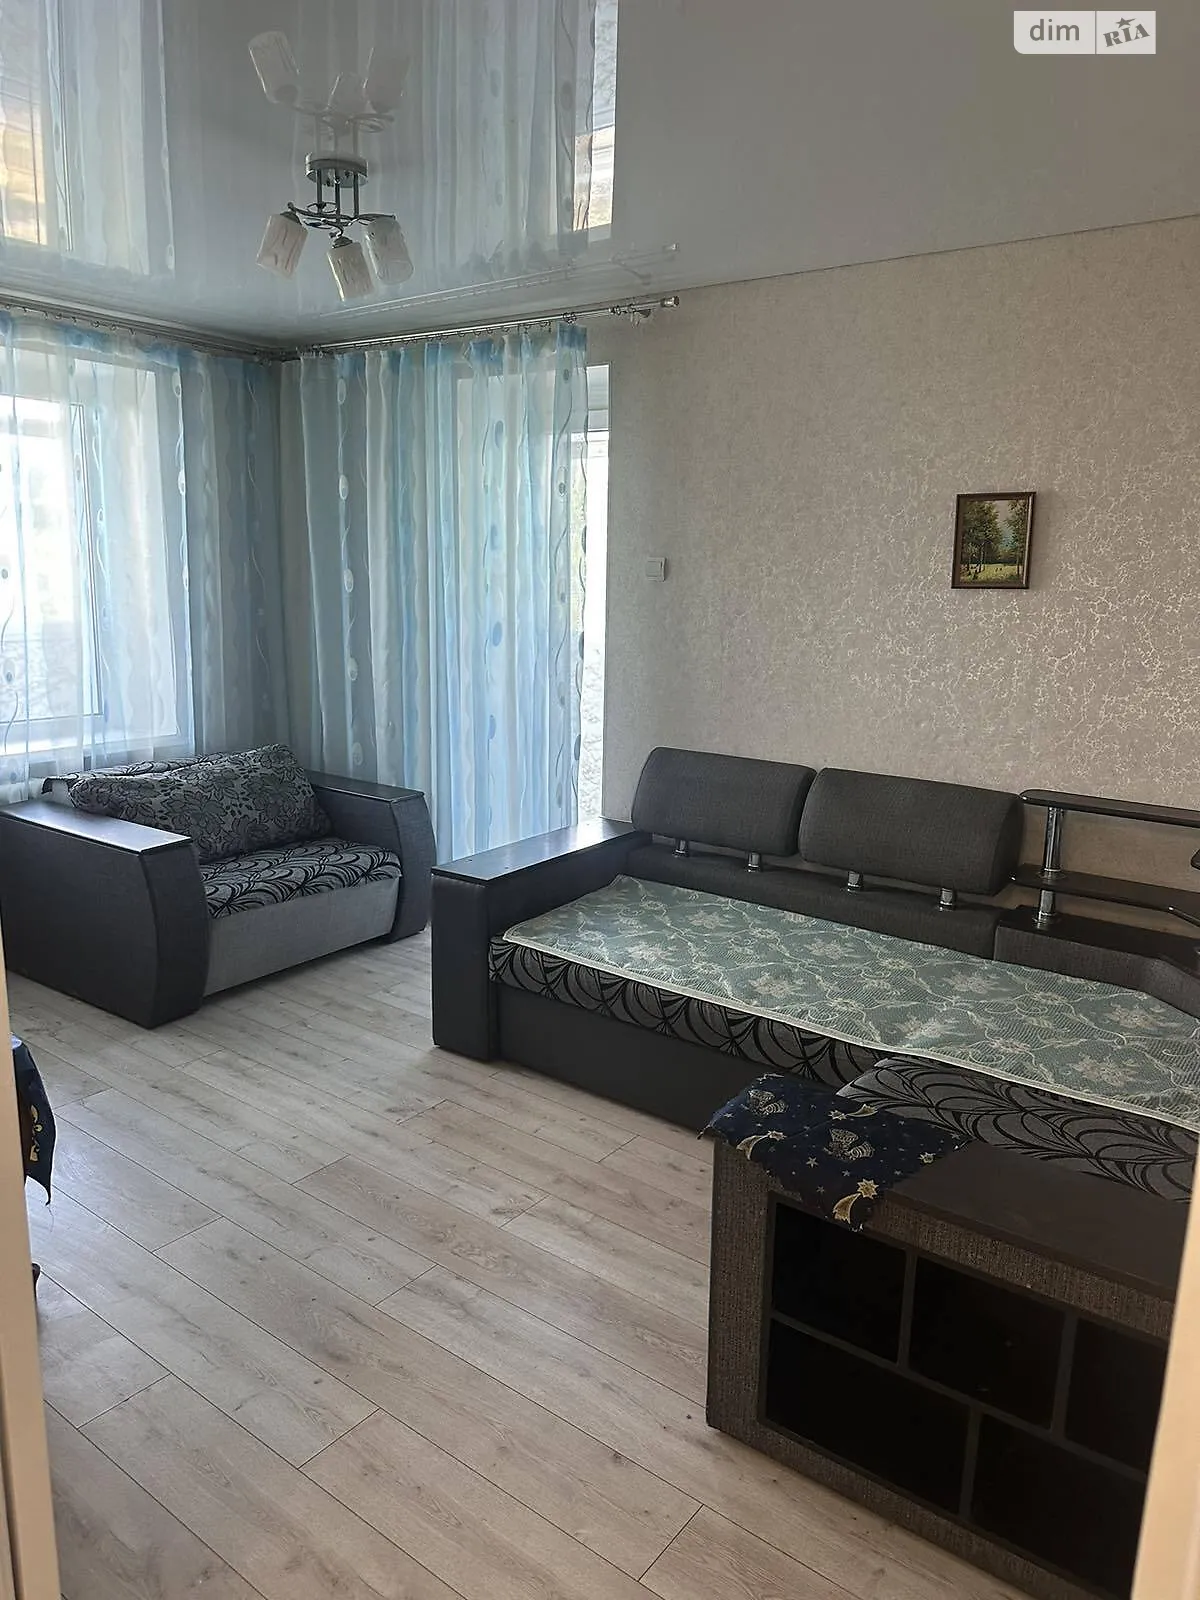 Сдается в аренду 3-комнатная квартира 68.8 кв. м в Николаеве - фото 2